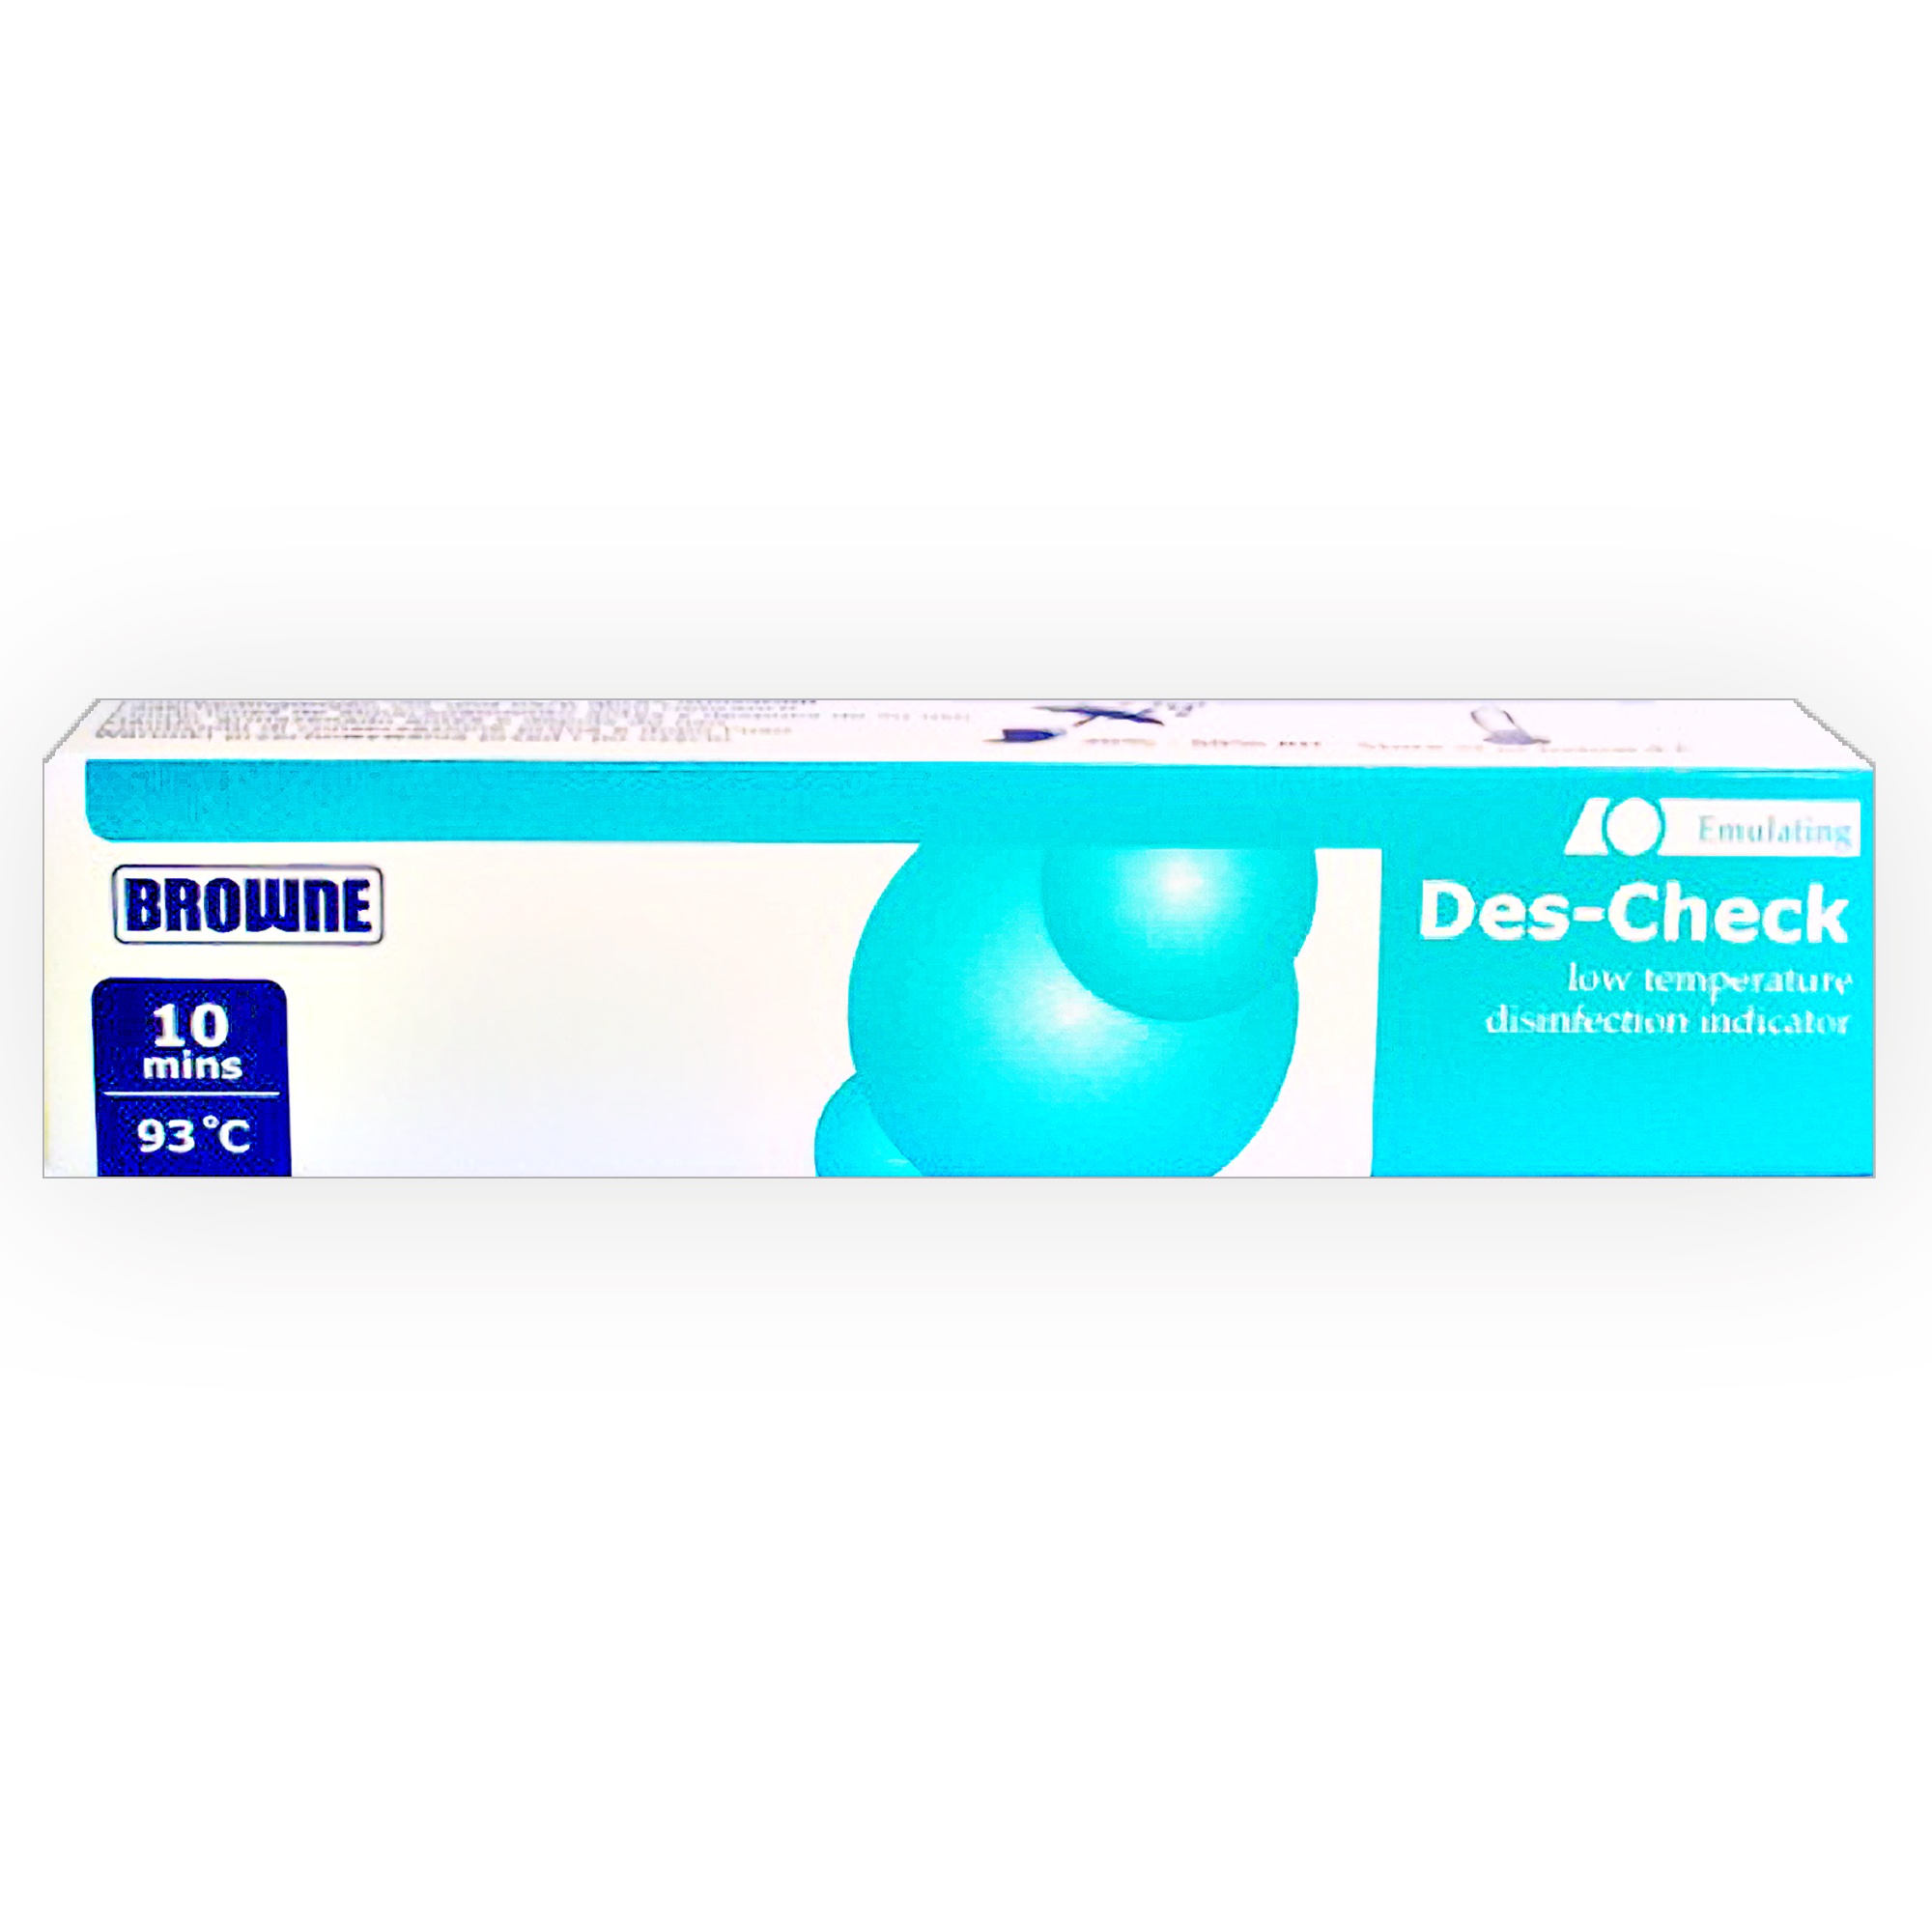 Chargenkontrolle Desinfektion - Des Check für feuchte Hitze Image